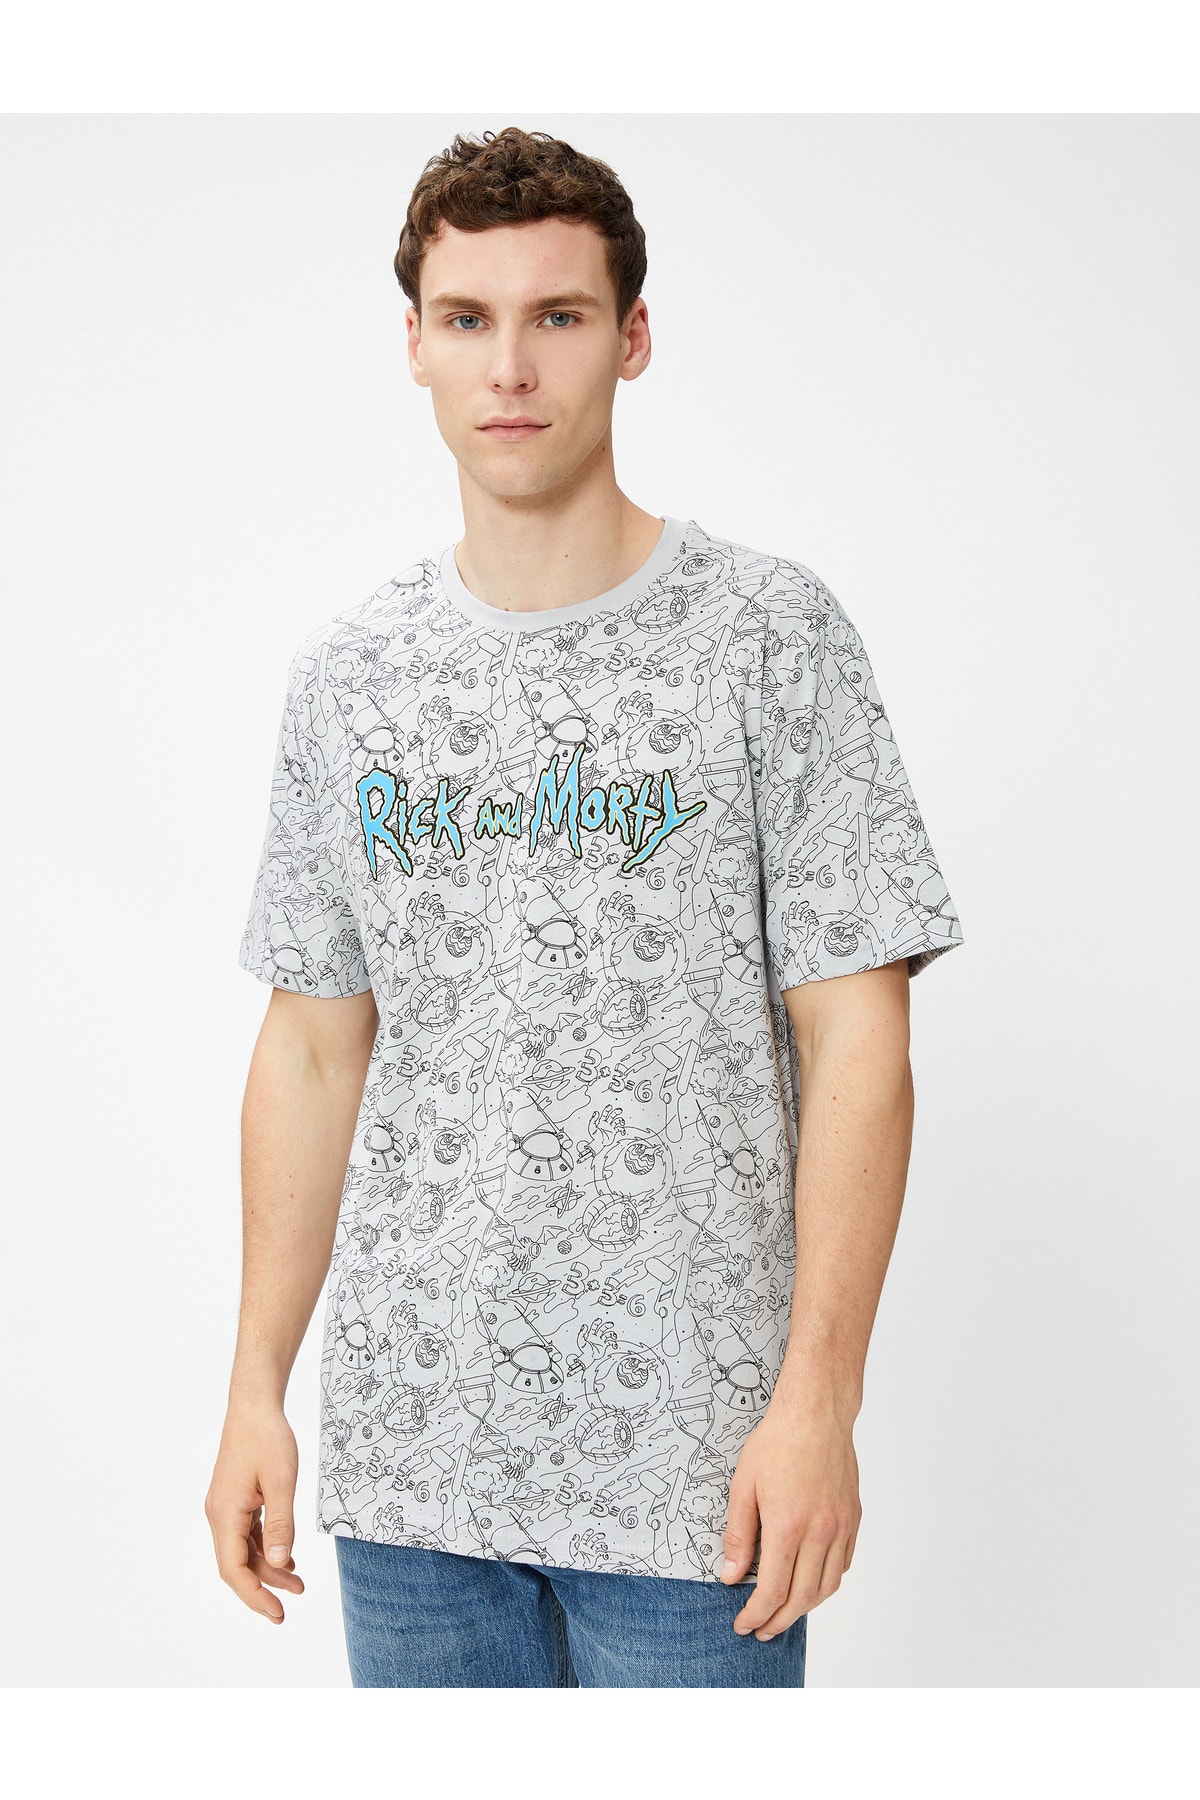 Koton Rick and Morty T-Shirt Licensed Printed Cotton